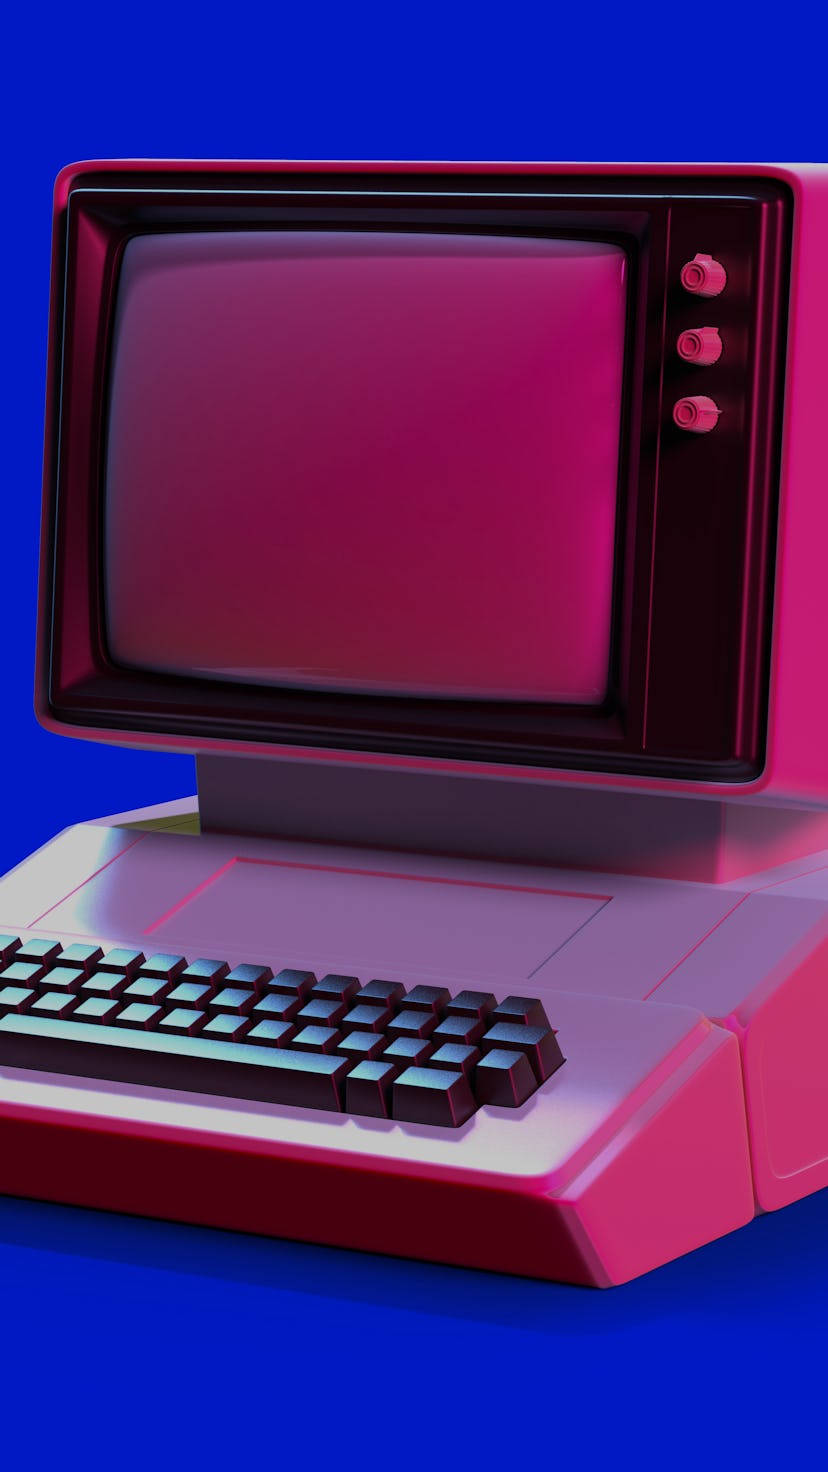 Retro 80s-style computer.